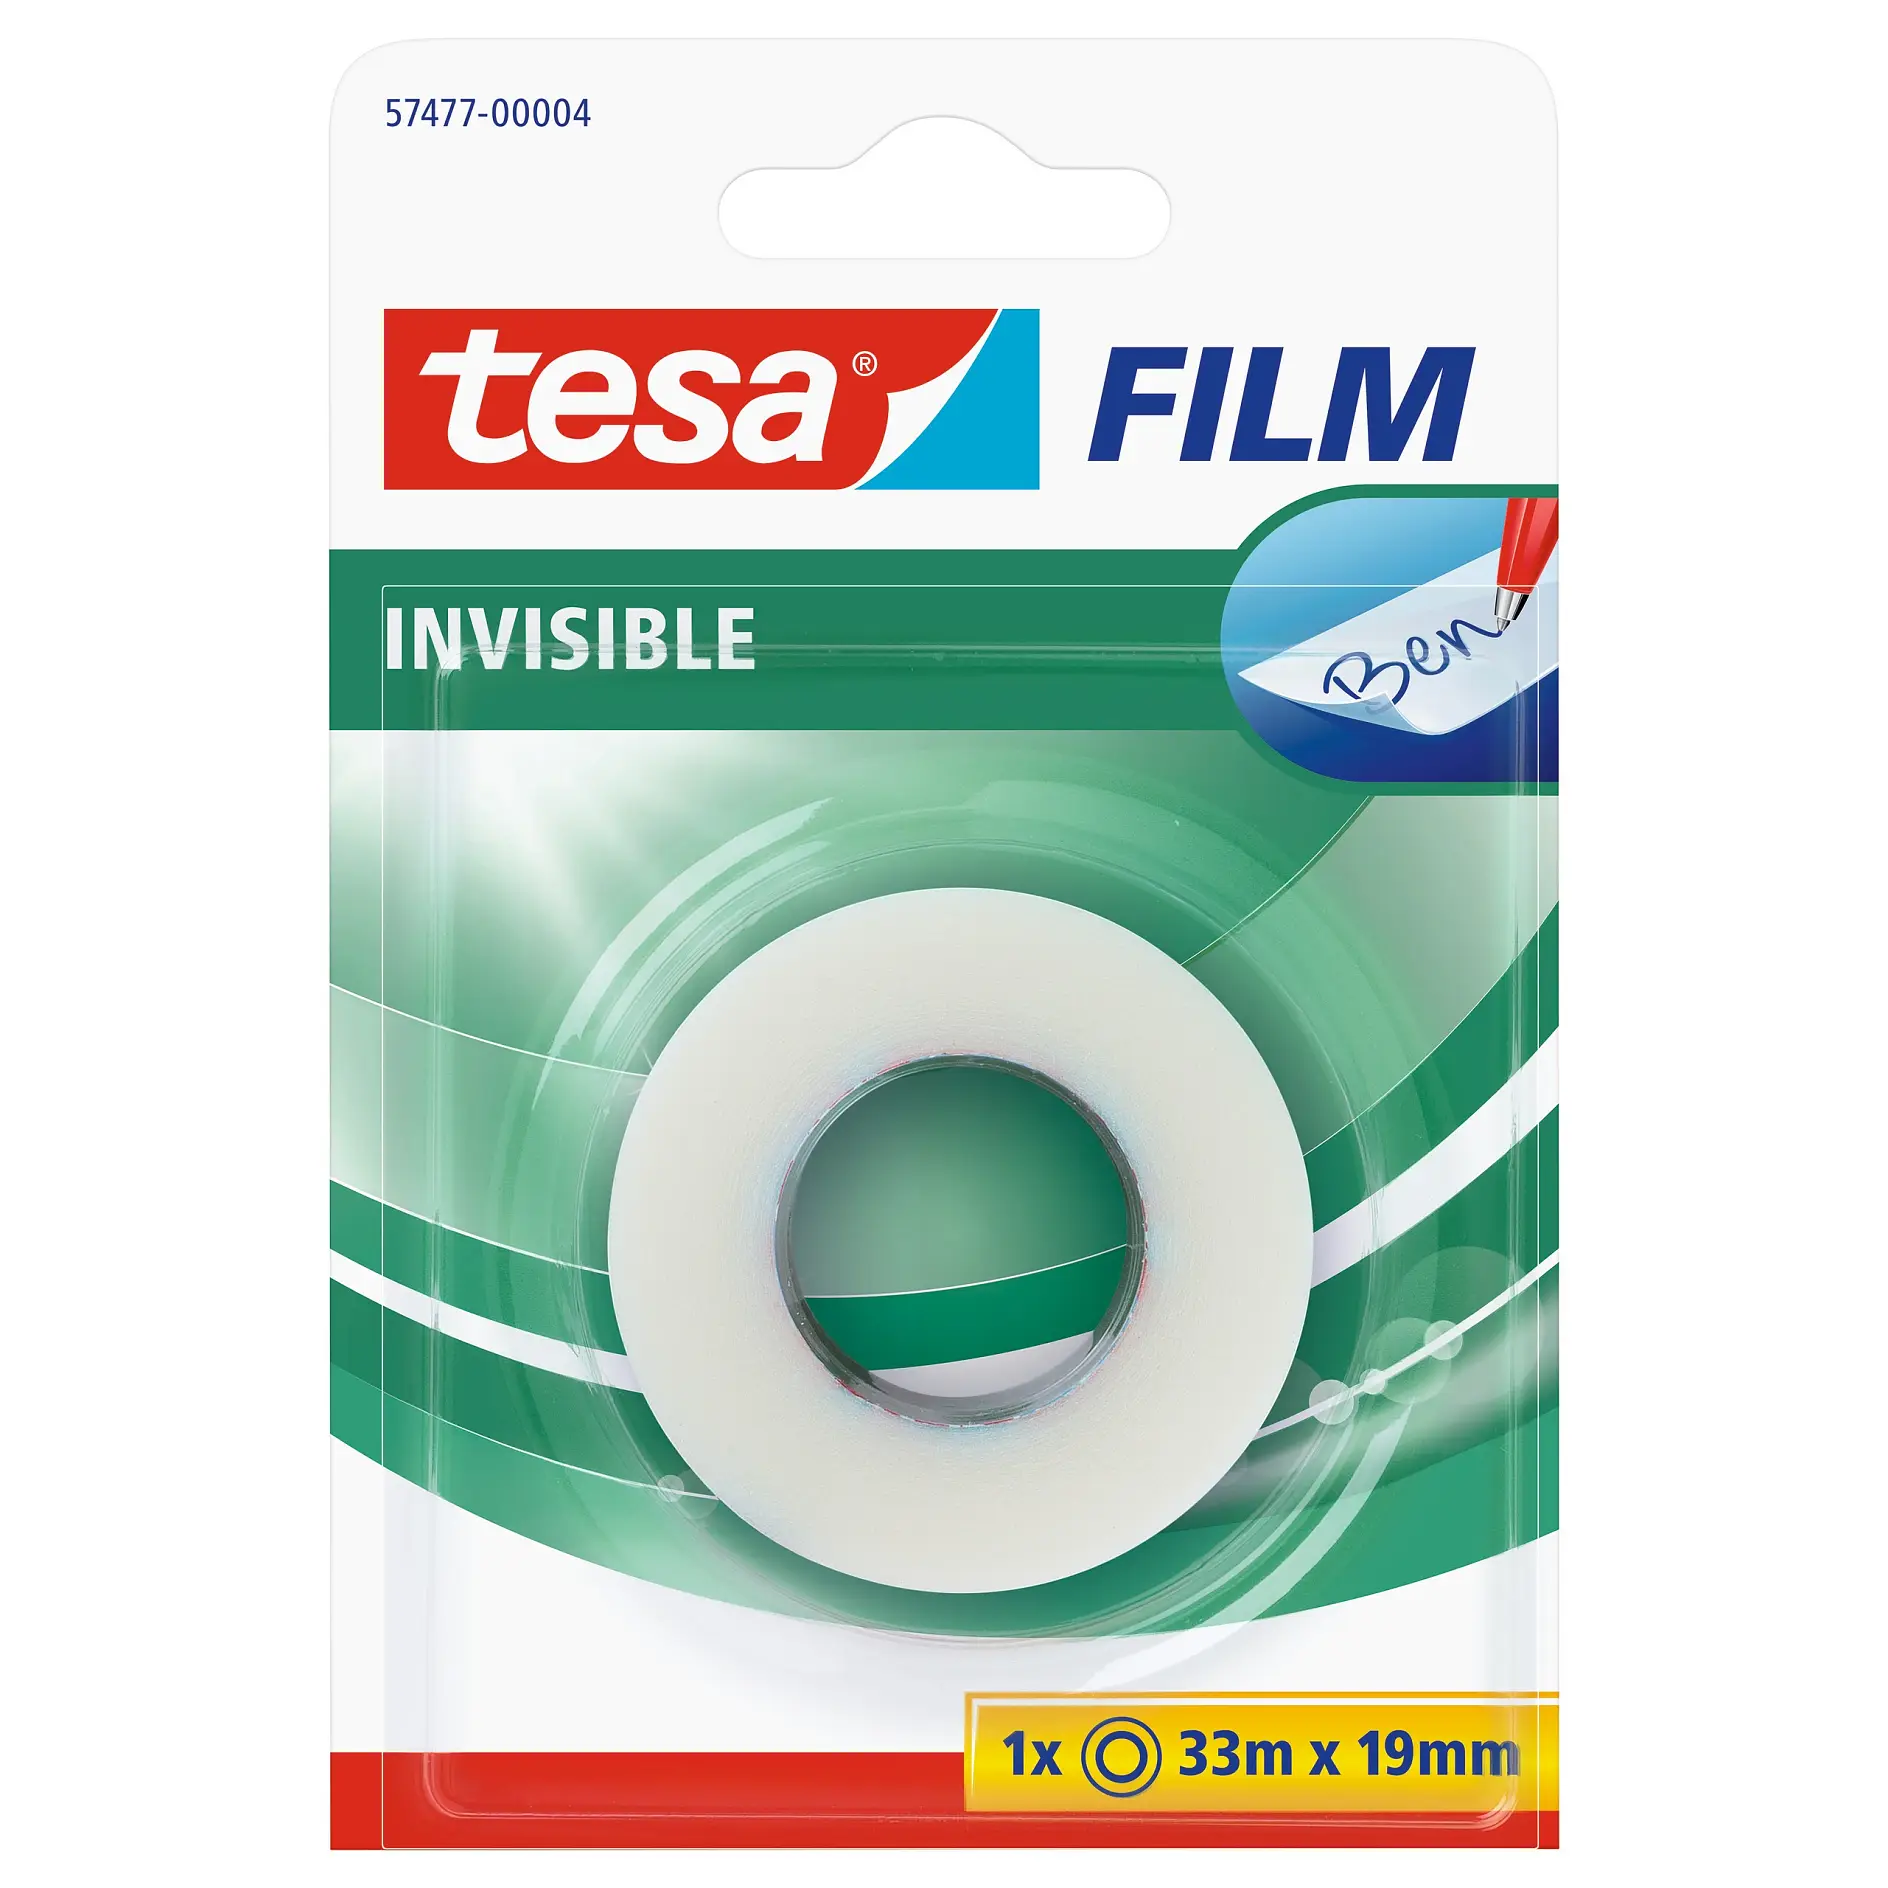 [en-en] 1 x tesafilm Invisible 33m x 19mm, Blister